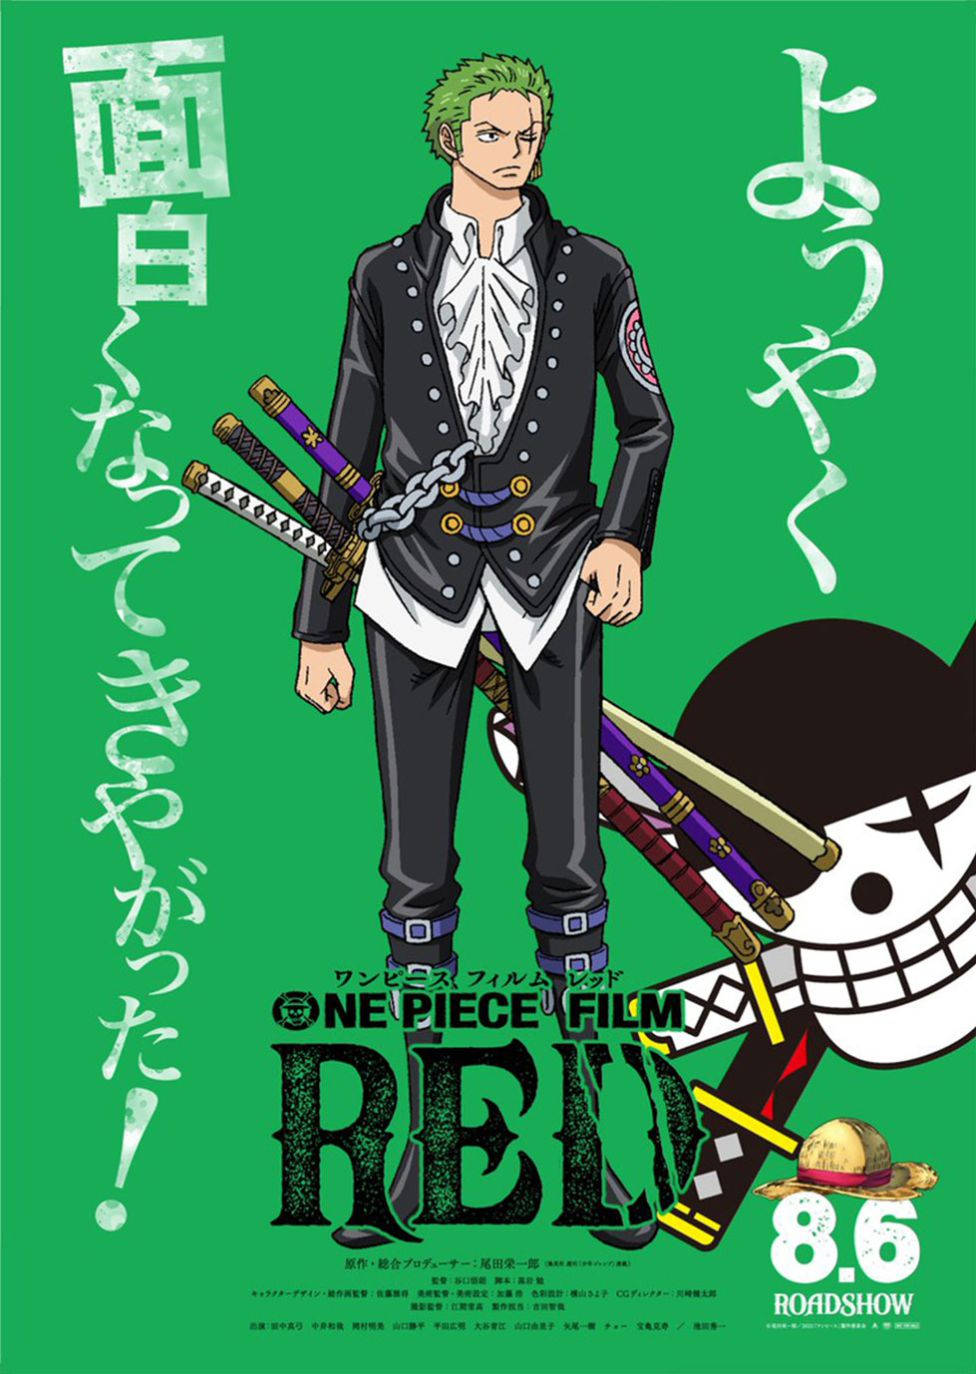 One Piece Film Red Zoro Poster